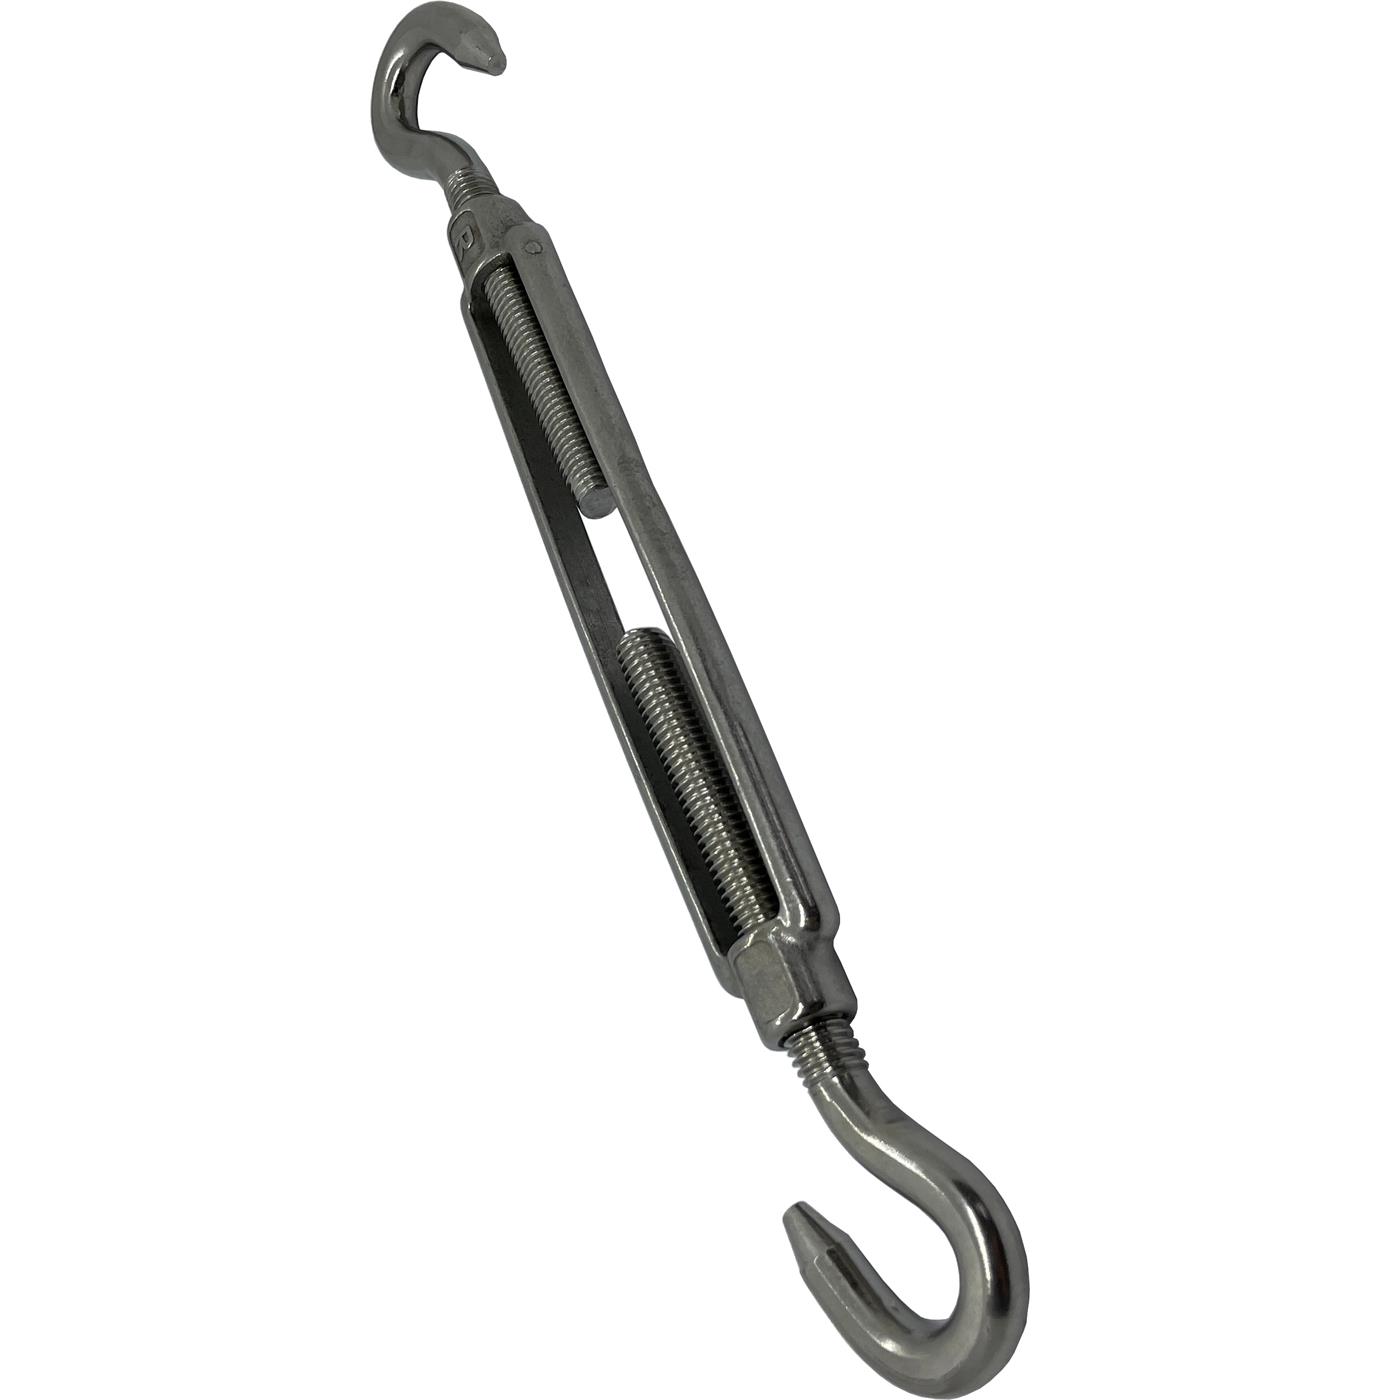 Rope tensioner Hook-Hook Stainless steel V2A 304 M4 Turnbuckle Shroud clamp